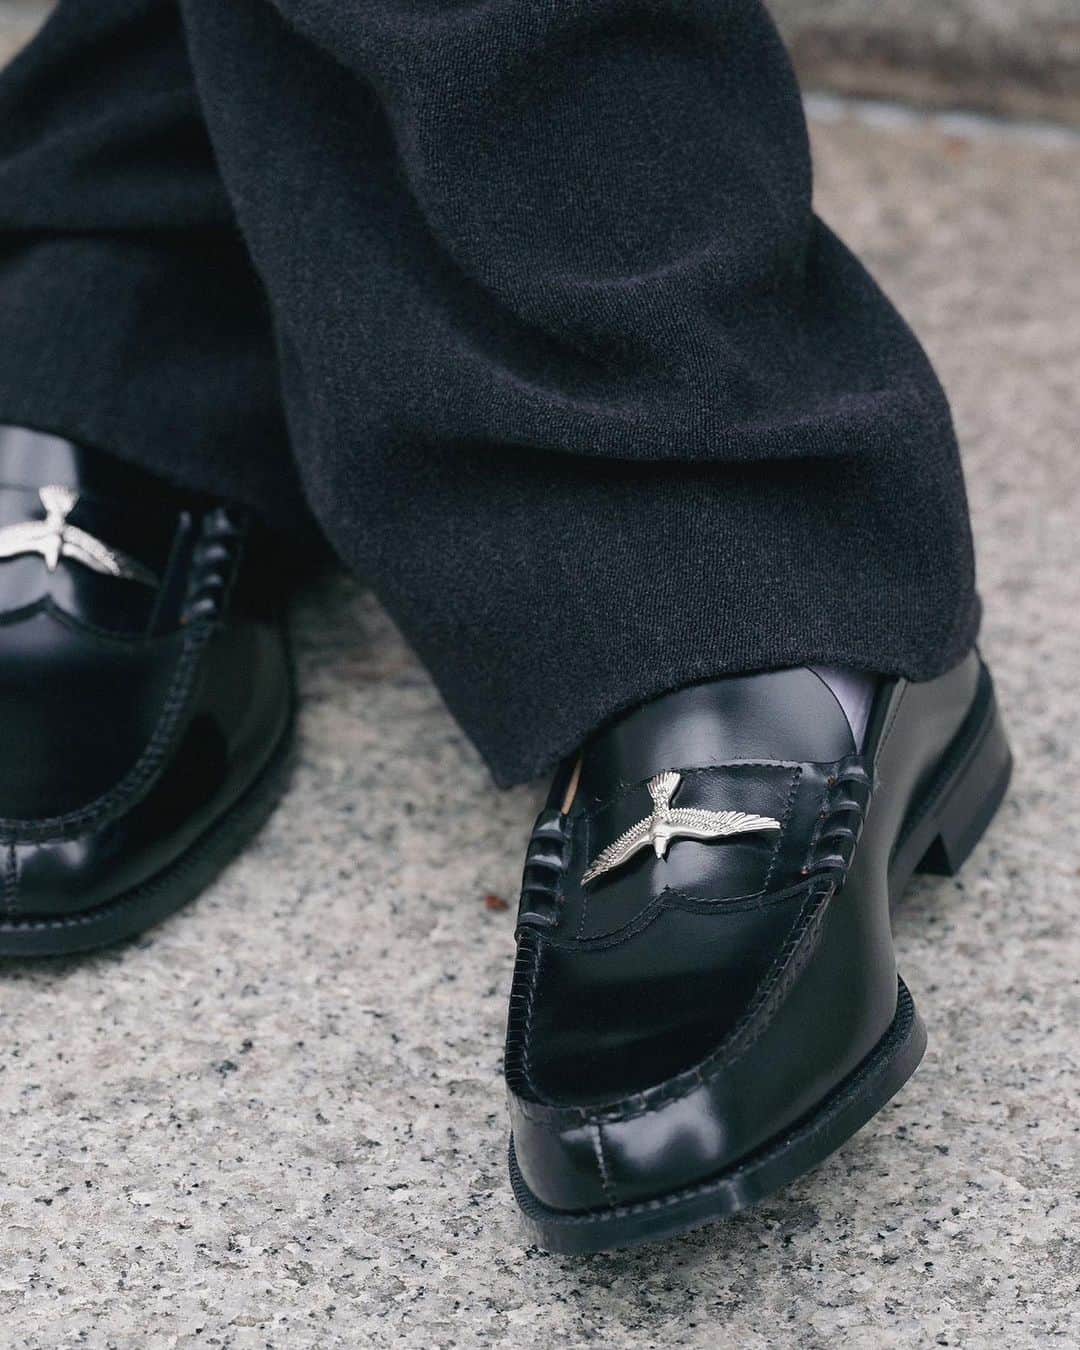 McGuffinさんのインスタグラム写真 - (McGuffinInstagram)「⚡️McGuffin Street News⚡️  <The Kenford Fineshoes> が”Loafers Accessories”を発売。  @kenford_fineshoes_official   革靴の新たな価値観を構築することをコンセプトに、MADE IN JAPANのクラシックローファーのみを幅広いデザインで発信する<The Kenford Fineshoes>は、ローファーに取り付ける真鍮製のアクセサリーを発売。10/6(金)18:00より販売を開始する。  アッパー中央部分の切れ込みに1セントを挟み込むローファー独自の文化をケンフォードなりに解釈し、 @in_put_out と共同製作したアクセサリー。自身で装着を行うだけで、シンプルなデザインにビットローファーのような装飾性をもたらすことが可能に。  また、”プレッピースタイル“をアップデートしたスタイリングと共に表現したルックでは、ルーツを尊重しながら進化をしていくブランドのアティチュードを示している。  商品の発売に合わせて、東京・名古屋・京都・福岡のジャーナル スタンダード内に期間限定Popup Storeをオープン。1店舗目となるジャーナル　スタンダード表参道店では、10/6(金)18:00よりローンチパーティーを開催する。 . Stylist:Yuzuru Saeki @yuzrusaeki Photographer: Yutto @yutto0129 Hair make: Narumi Nishihara @narunissy Model: Kaisei @kaiseishiomi Director: Yu Orishikide @ohli_day . “Loafers Accessories” Launch Party 10/6 Fri 18:00~21:00  at JOURNAL STANDARD OMOTESANDO Entrance Free <DJ> VLOT @prod_by_vlot PARISA @parisakanno YUZRU @yuzrusaeki . Popup Store “IRIBITARI” at JOURNAL STANDARD 10/6 Fri-10/15 Sun: JOUNAL STANDARD OMOTESANDO @jsomotesando 10/20 Fri-10/29 Sun: BAYCREW’S STORE NAGOYA @baycrewsstore_nagoya 10/31 Tue-11/12 Sun: JOURNAL STANDARD KITASENJU　※10/31 OPEN 11/3 Fri-11/12 Sun: JOUNAL STANDARD KYOTO @js.kyoto 11/17 Fri–11/26 Sun: JOURNAL STANDARD FUKUOKA  @jsfukuoka  . #thekenfordfineshoes #kenford」10月2日 10時06分 - mcguffin_official